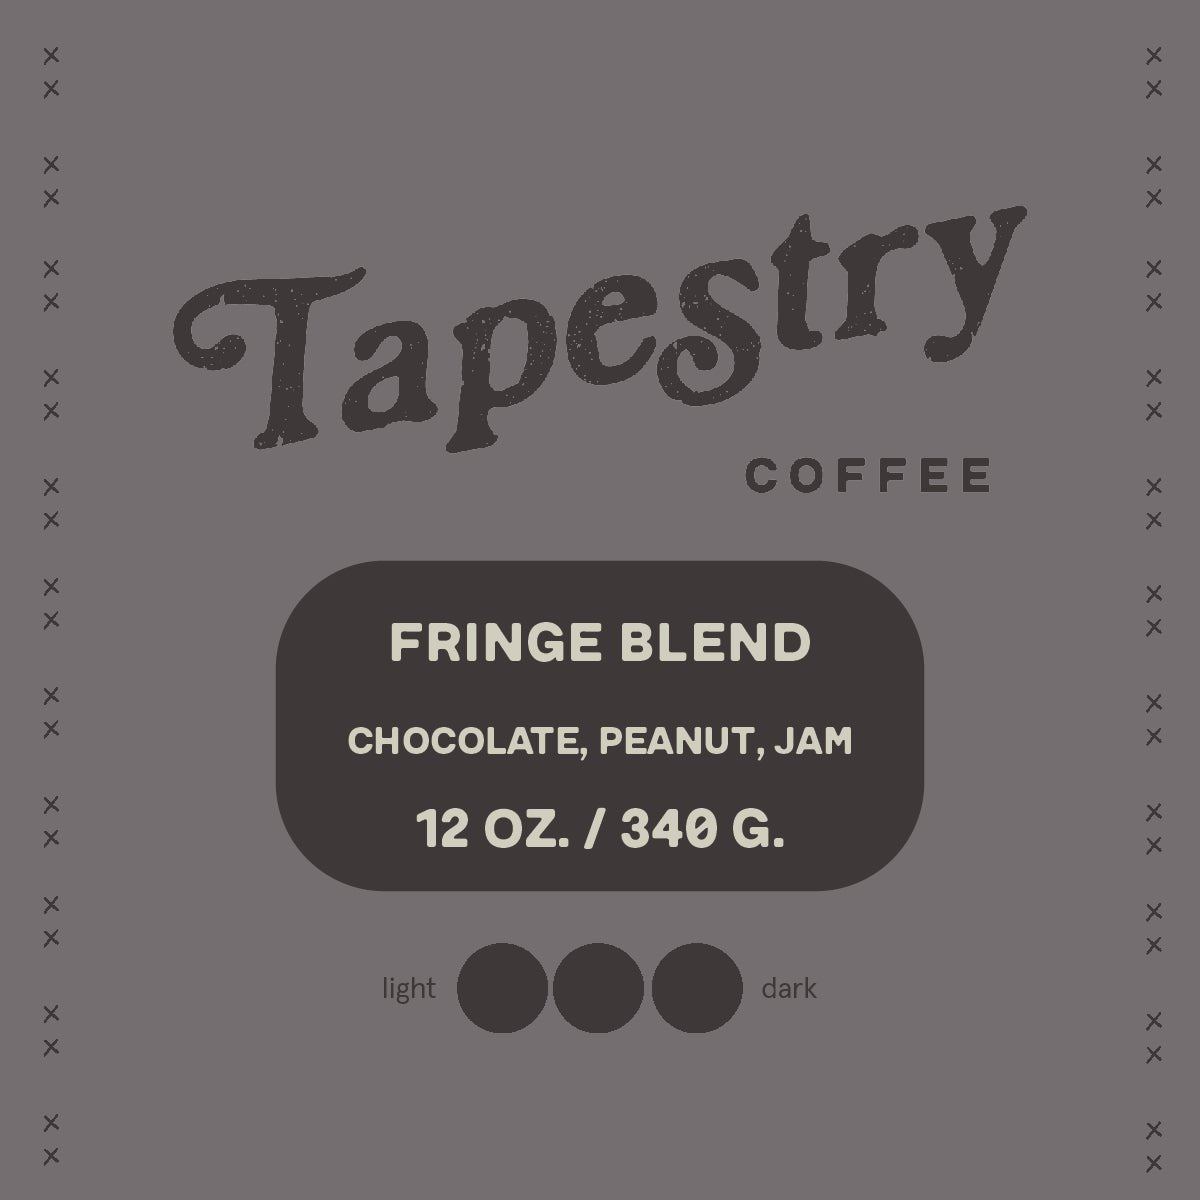 Fringe Blend - Tapestry Coffee